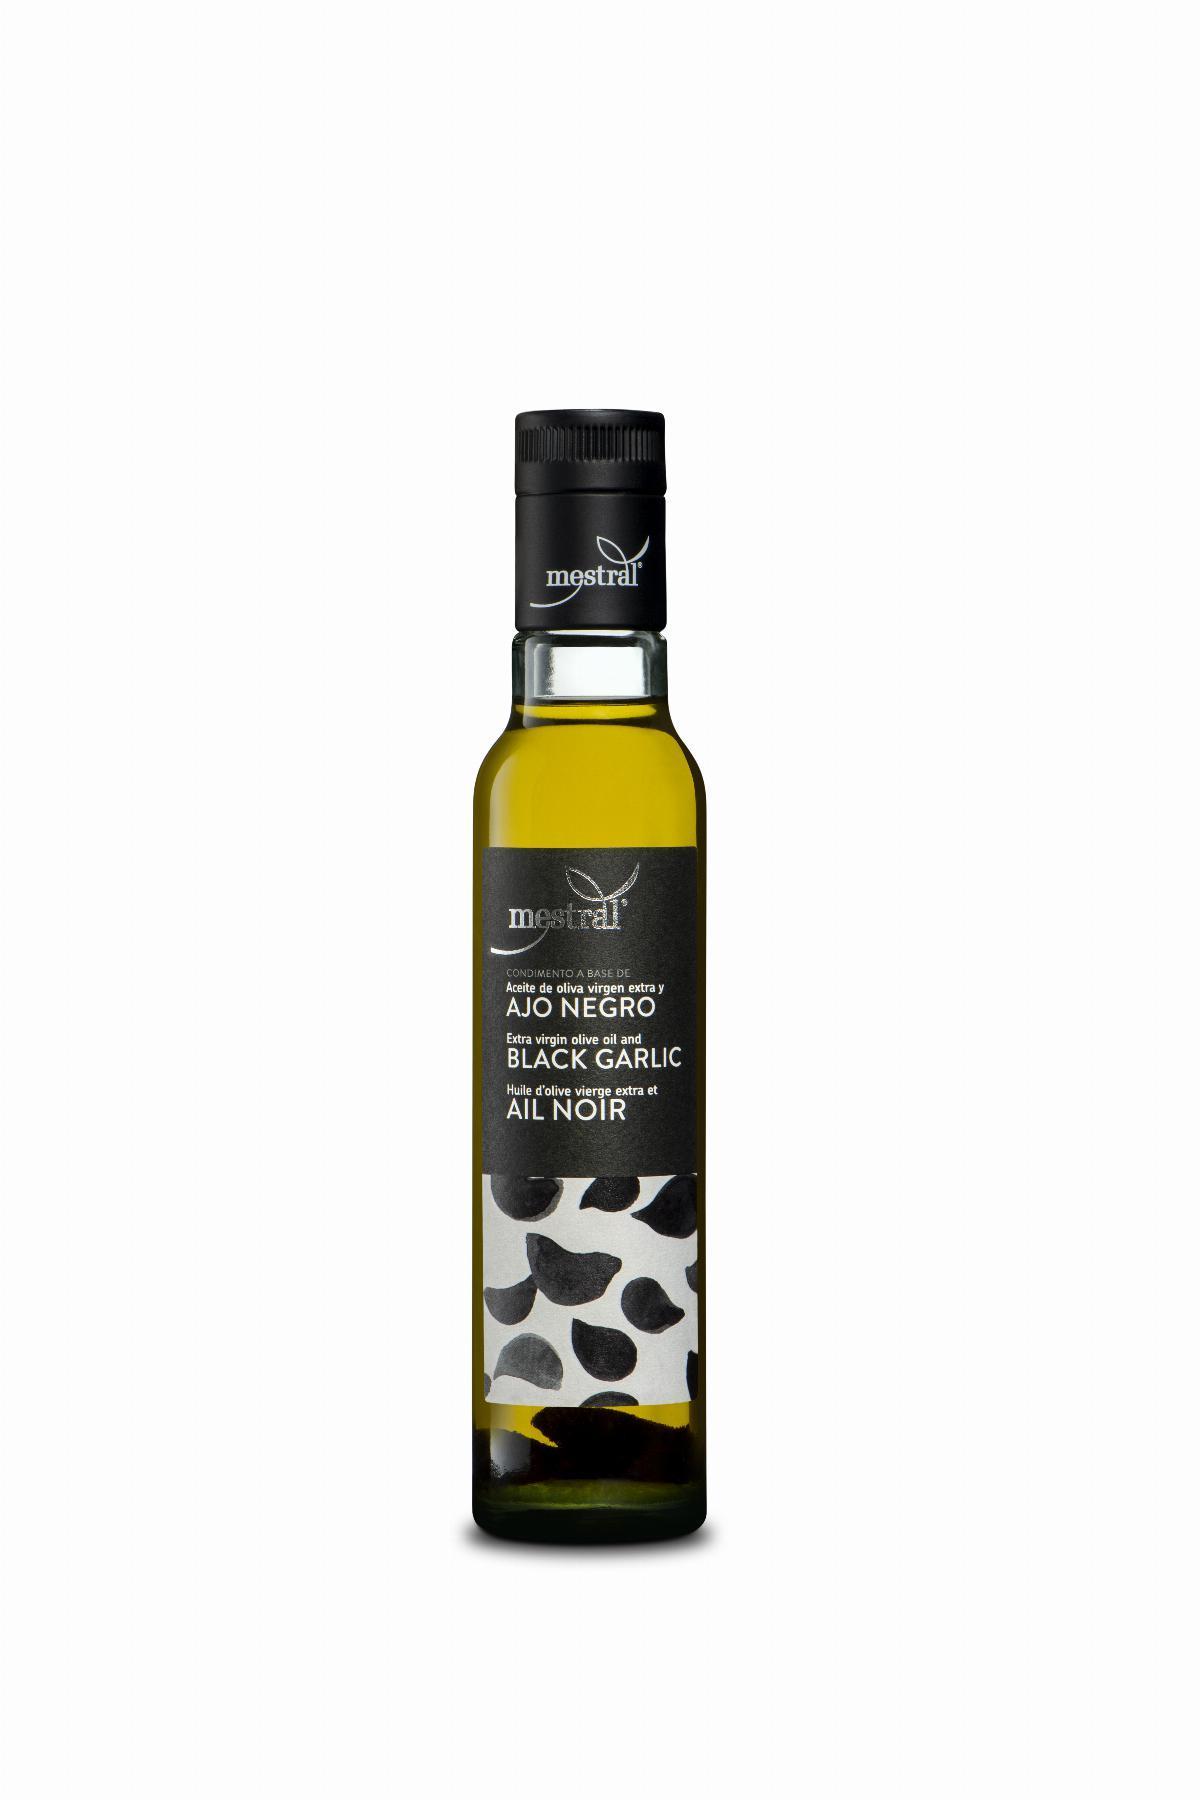 Aceites y Condimentos - Oli d'Oliva Verge Extra Mestral amb All Negre, ampolla Dòrica transparent, 250ml, ES-EN-FR - Mestral Cambrils